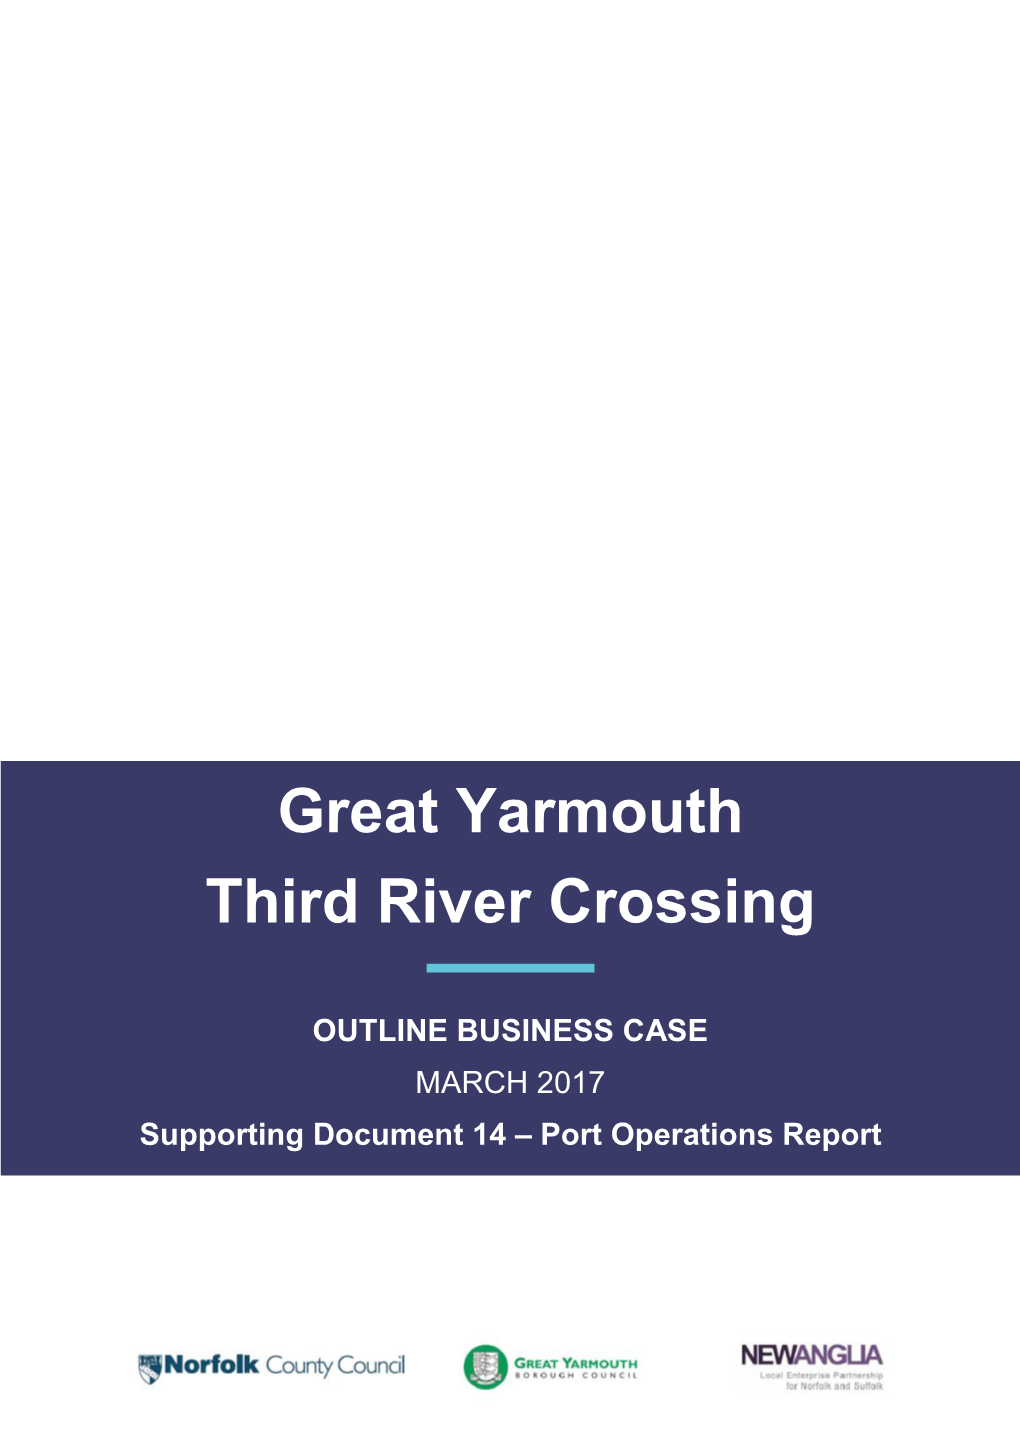 Port Operations Report